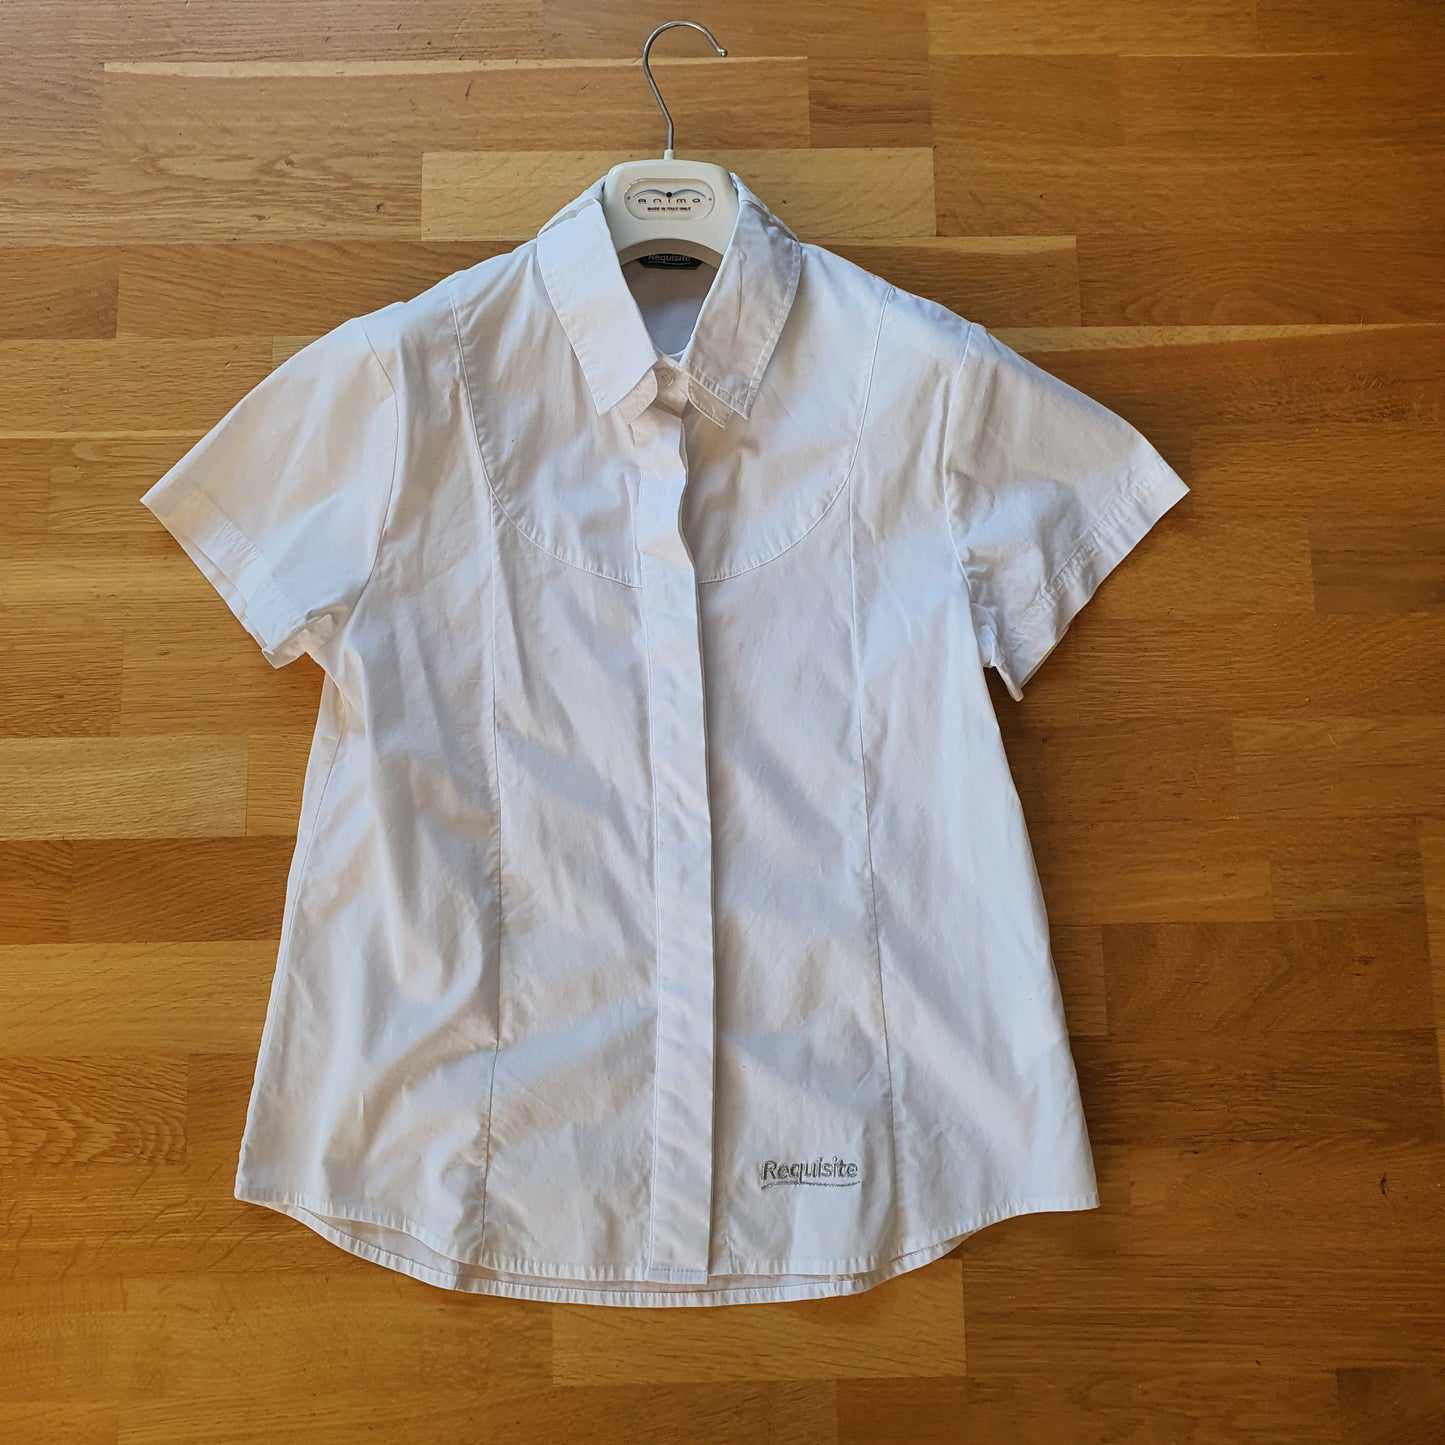 Requisite white show shirt girls age 12